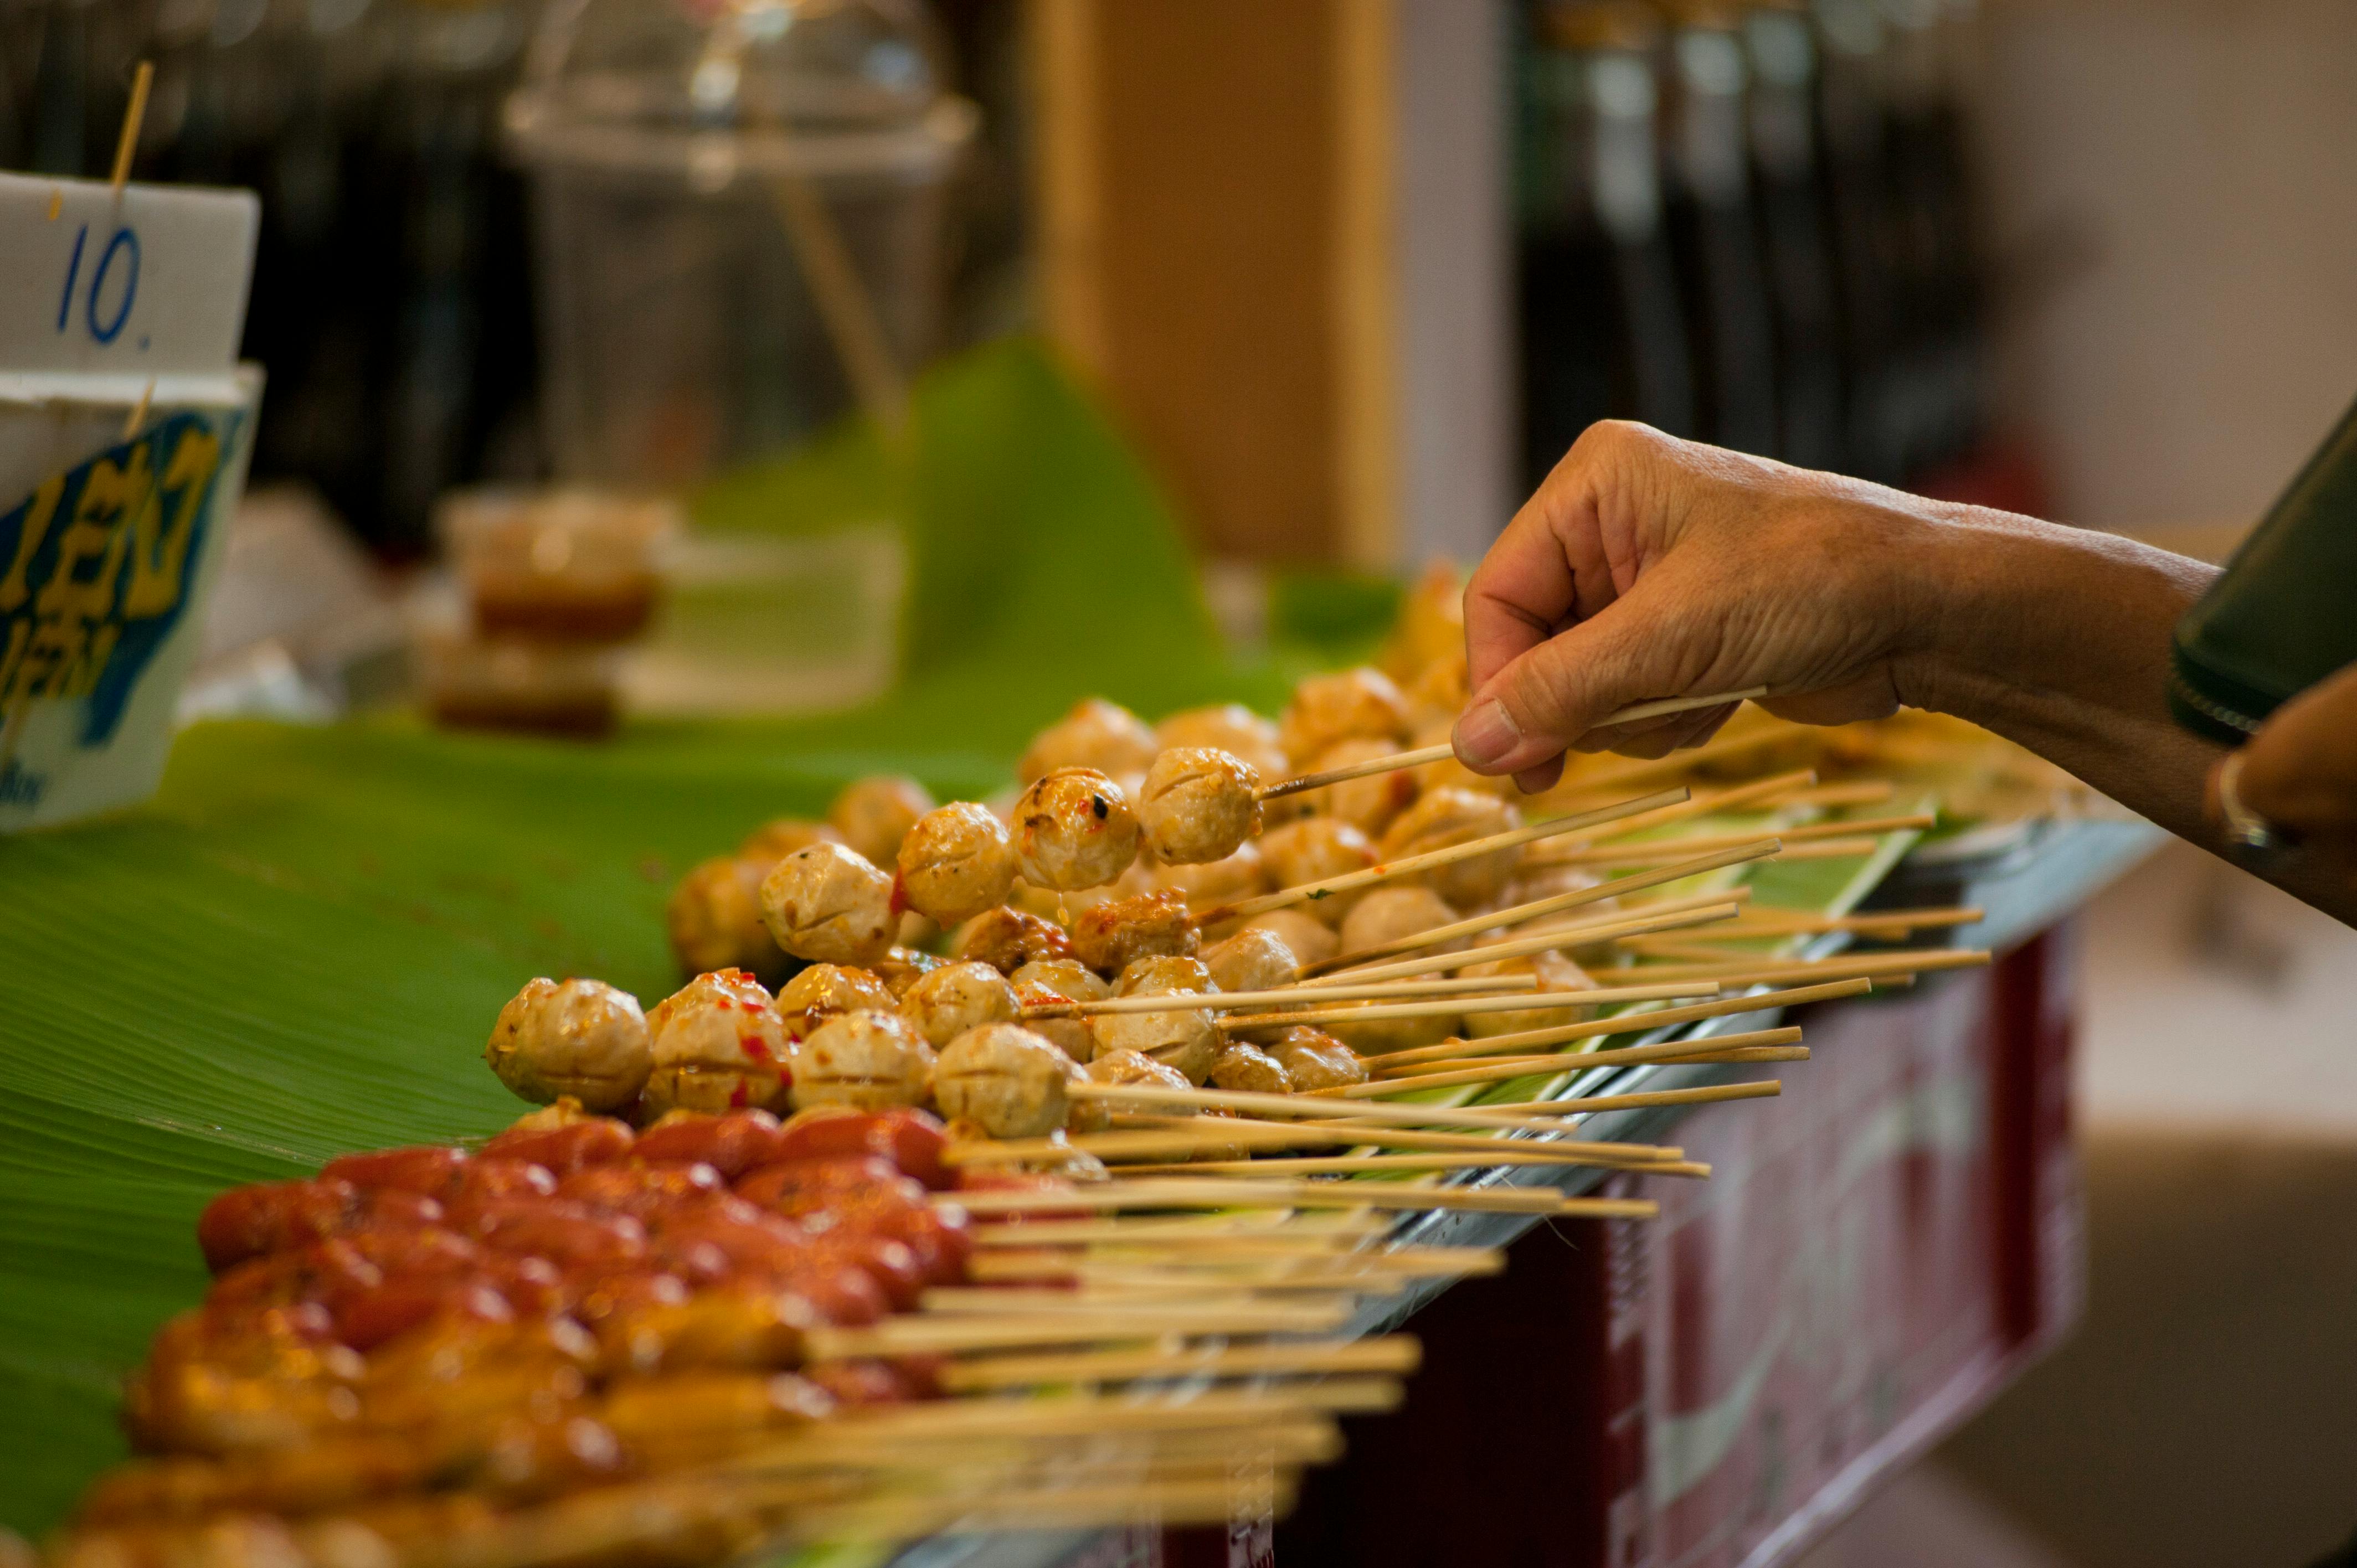 tilt shift photography of street foods in stick